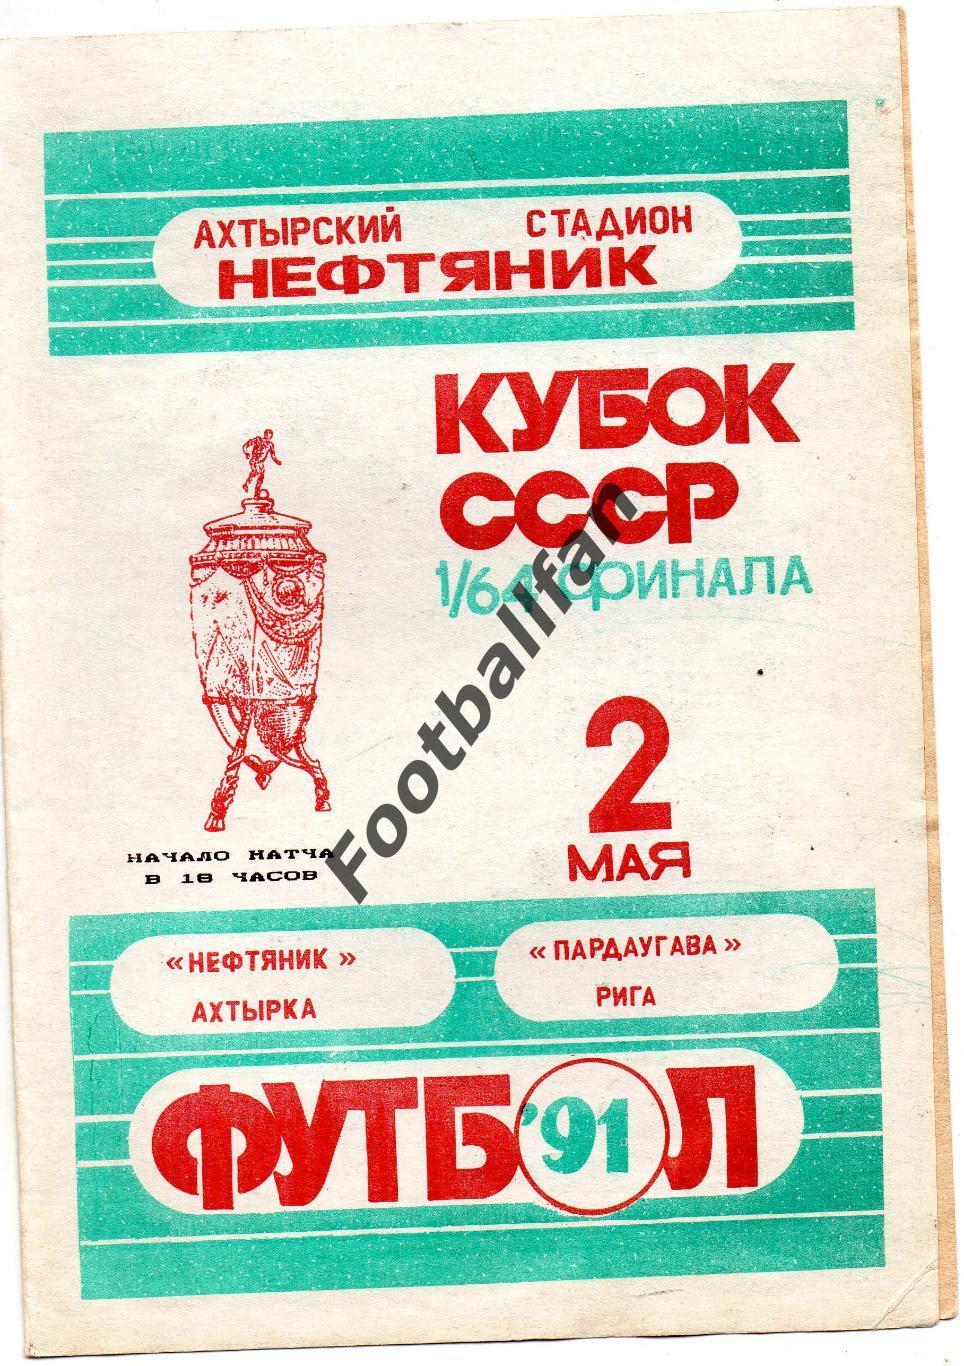 Нефтяник Ахтырка - Пардаугава Рига 02.05.1991 Кубок СССР